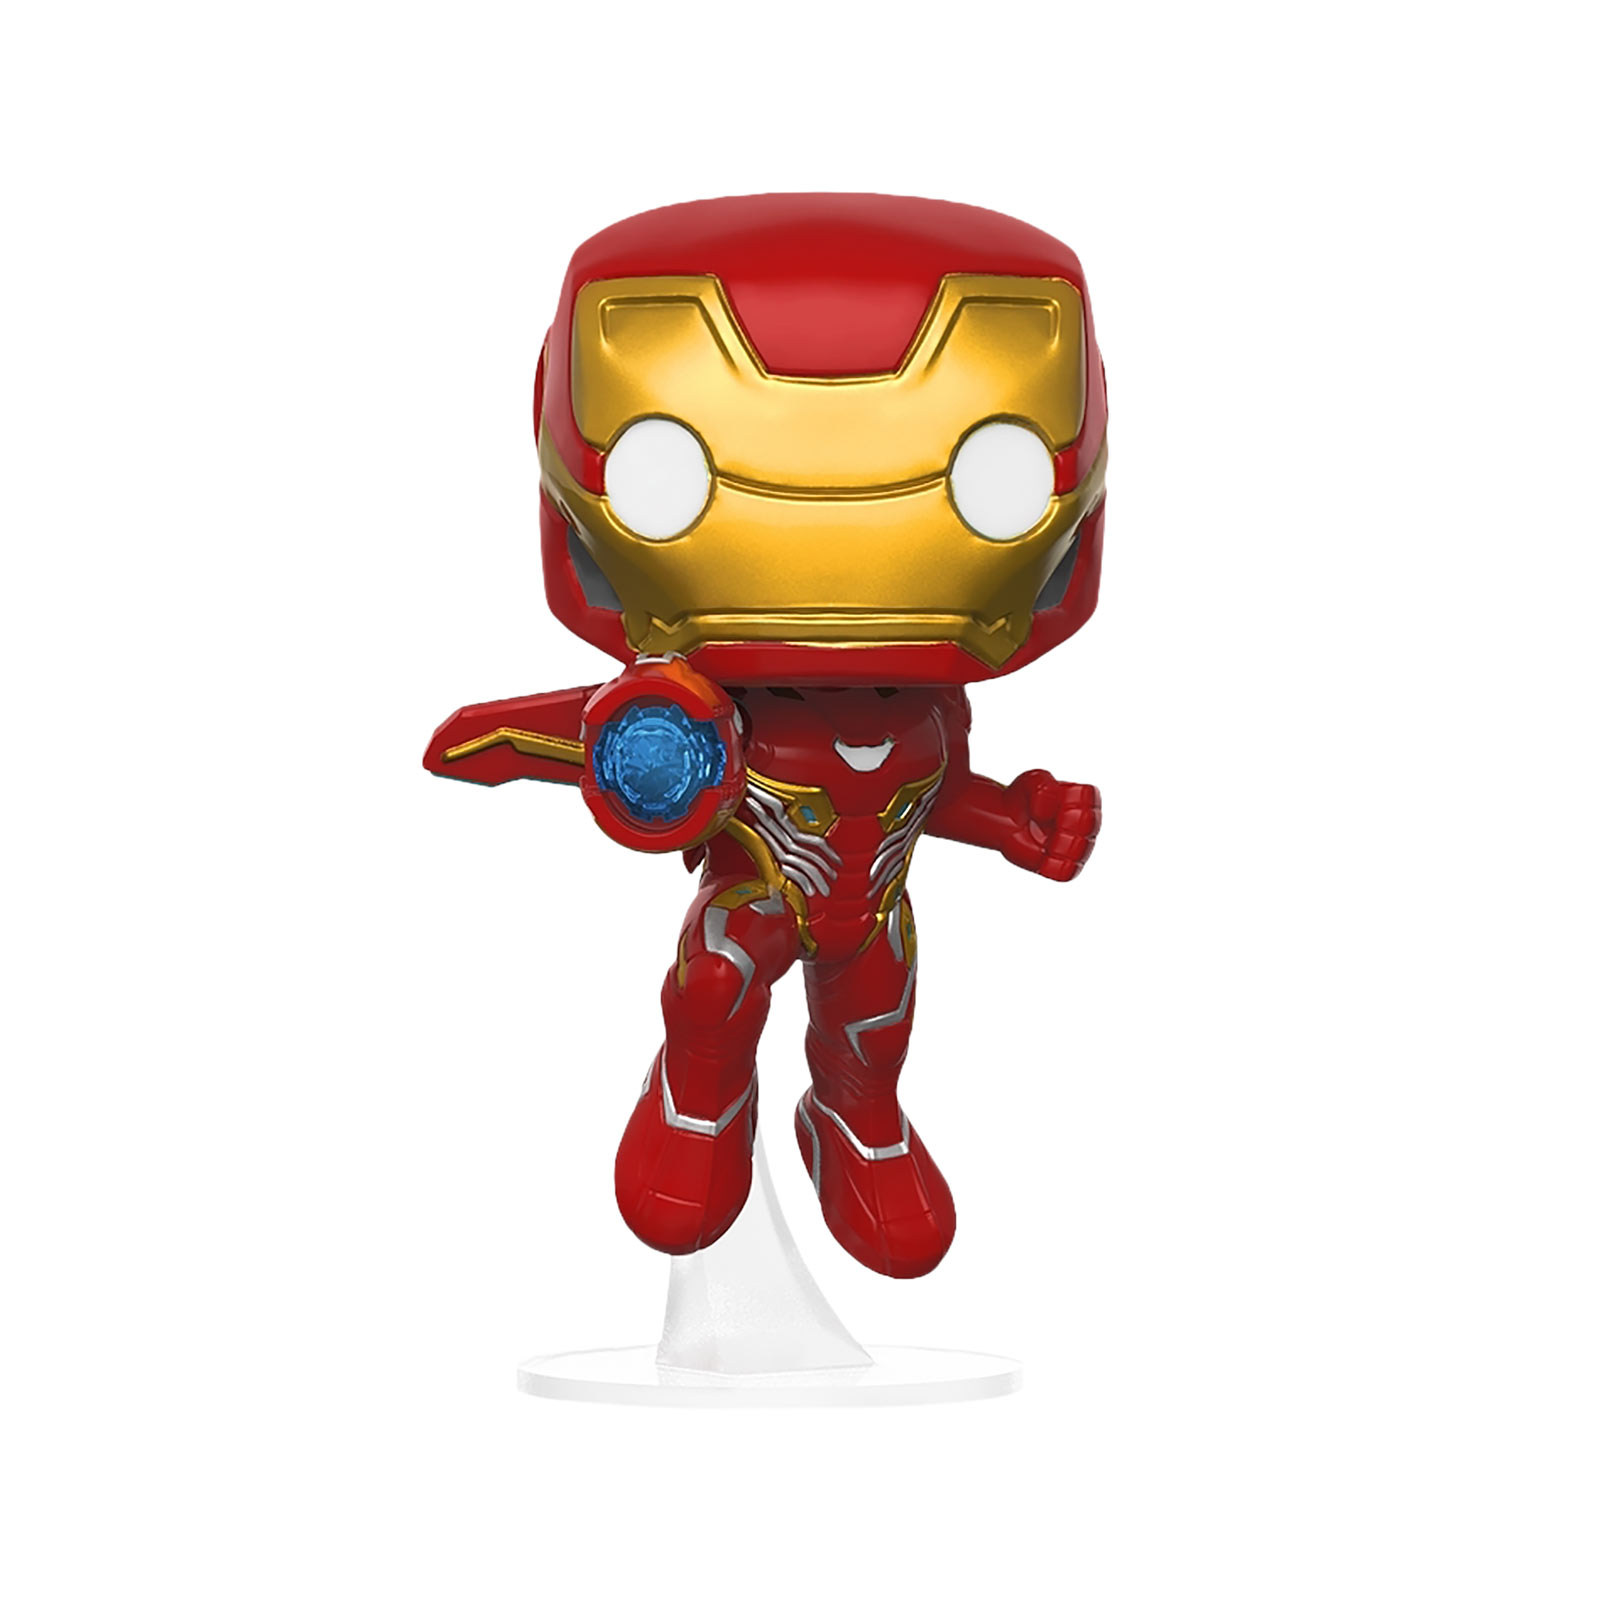 Avengers - Iron Man Infinity War Funko Pop Bobblehead Figure